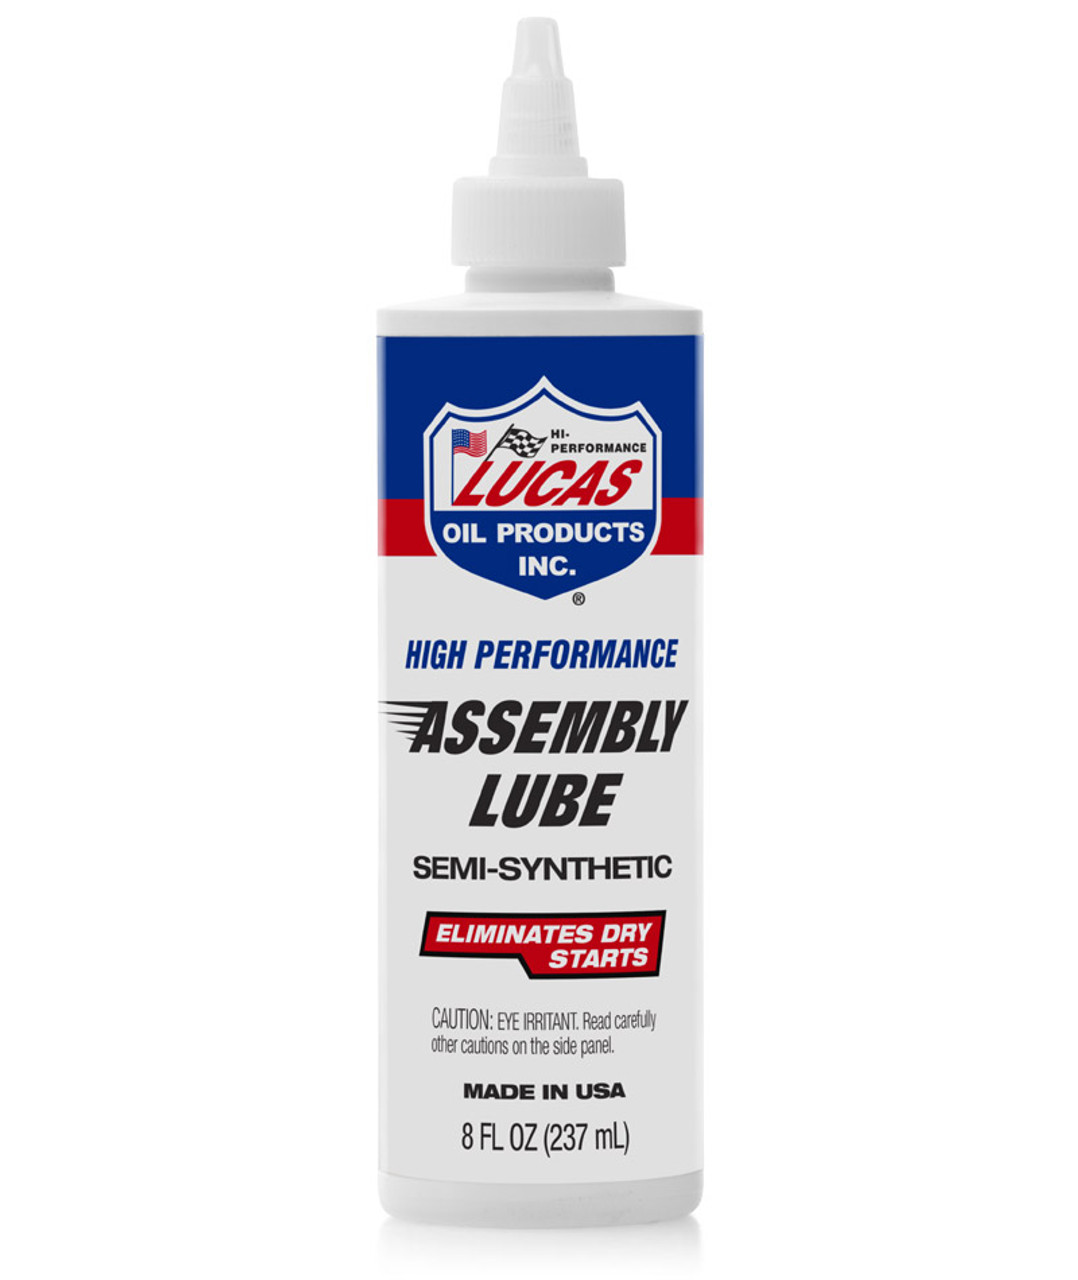 Lucas Oil 7.3L Powerstroke Assembly Lube